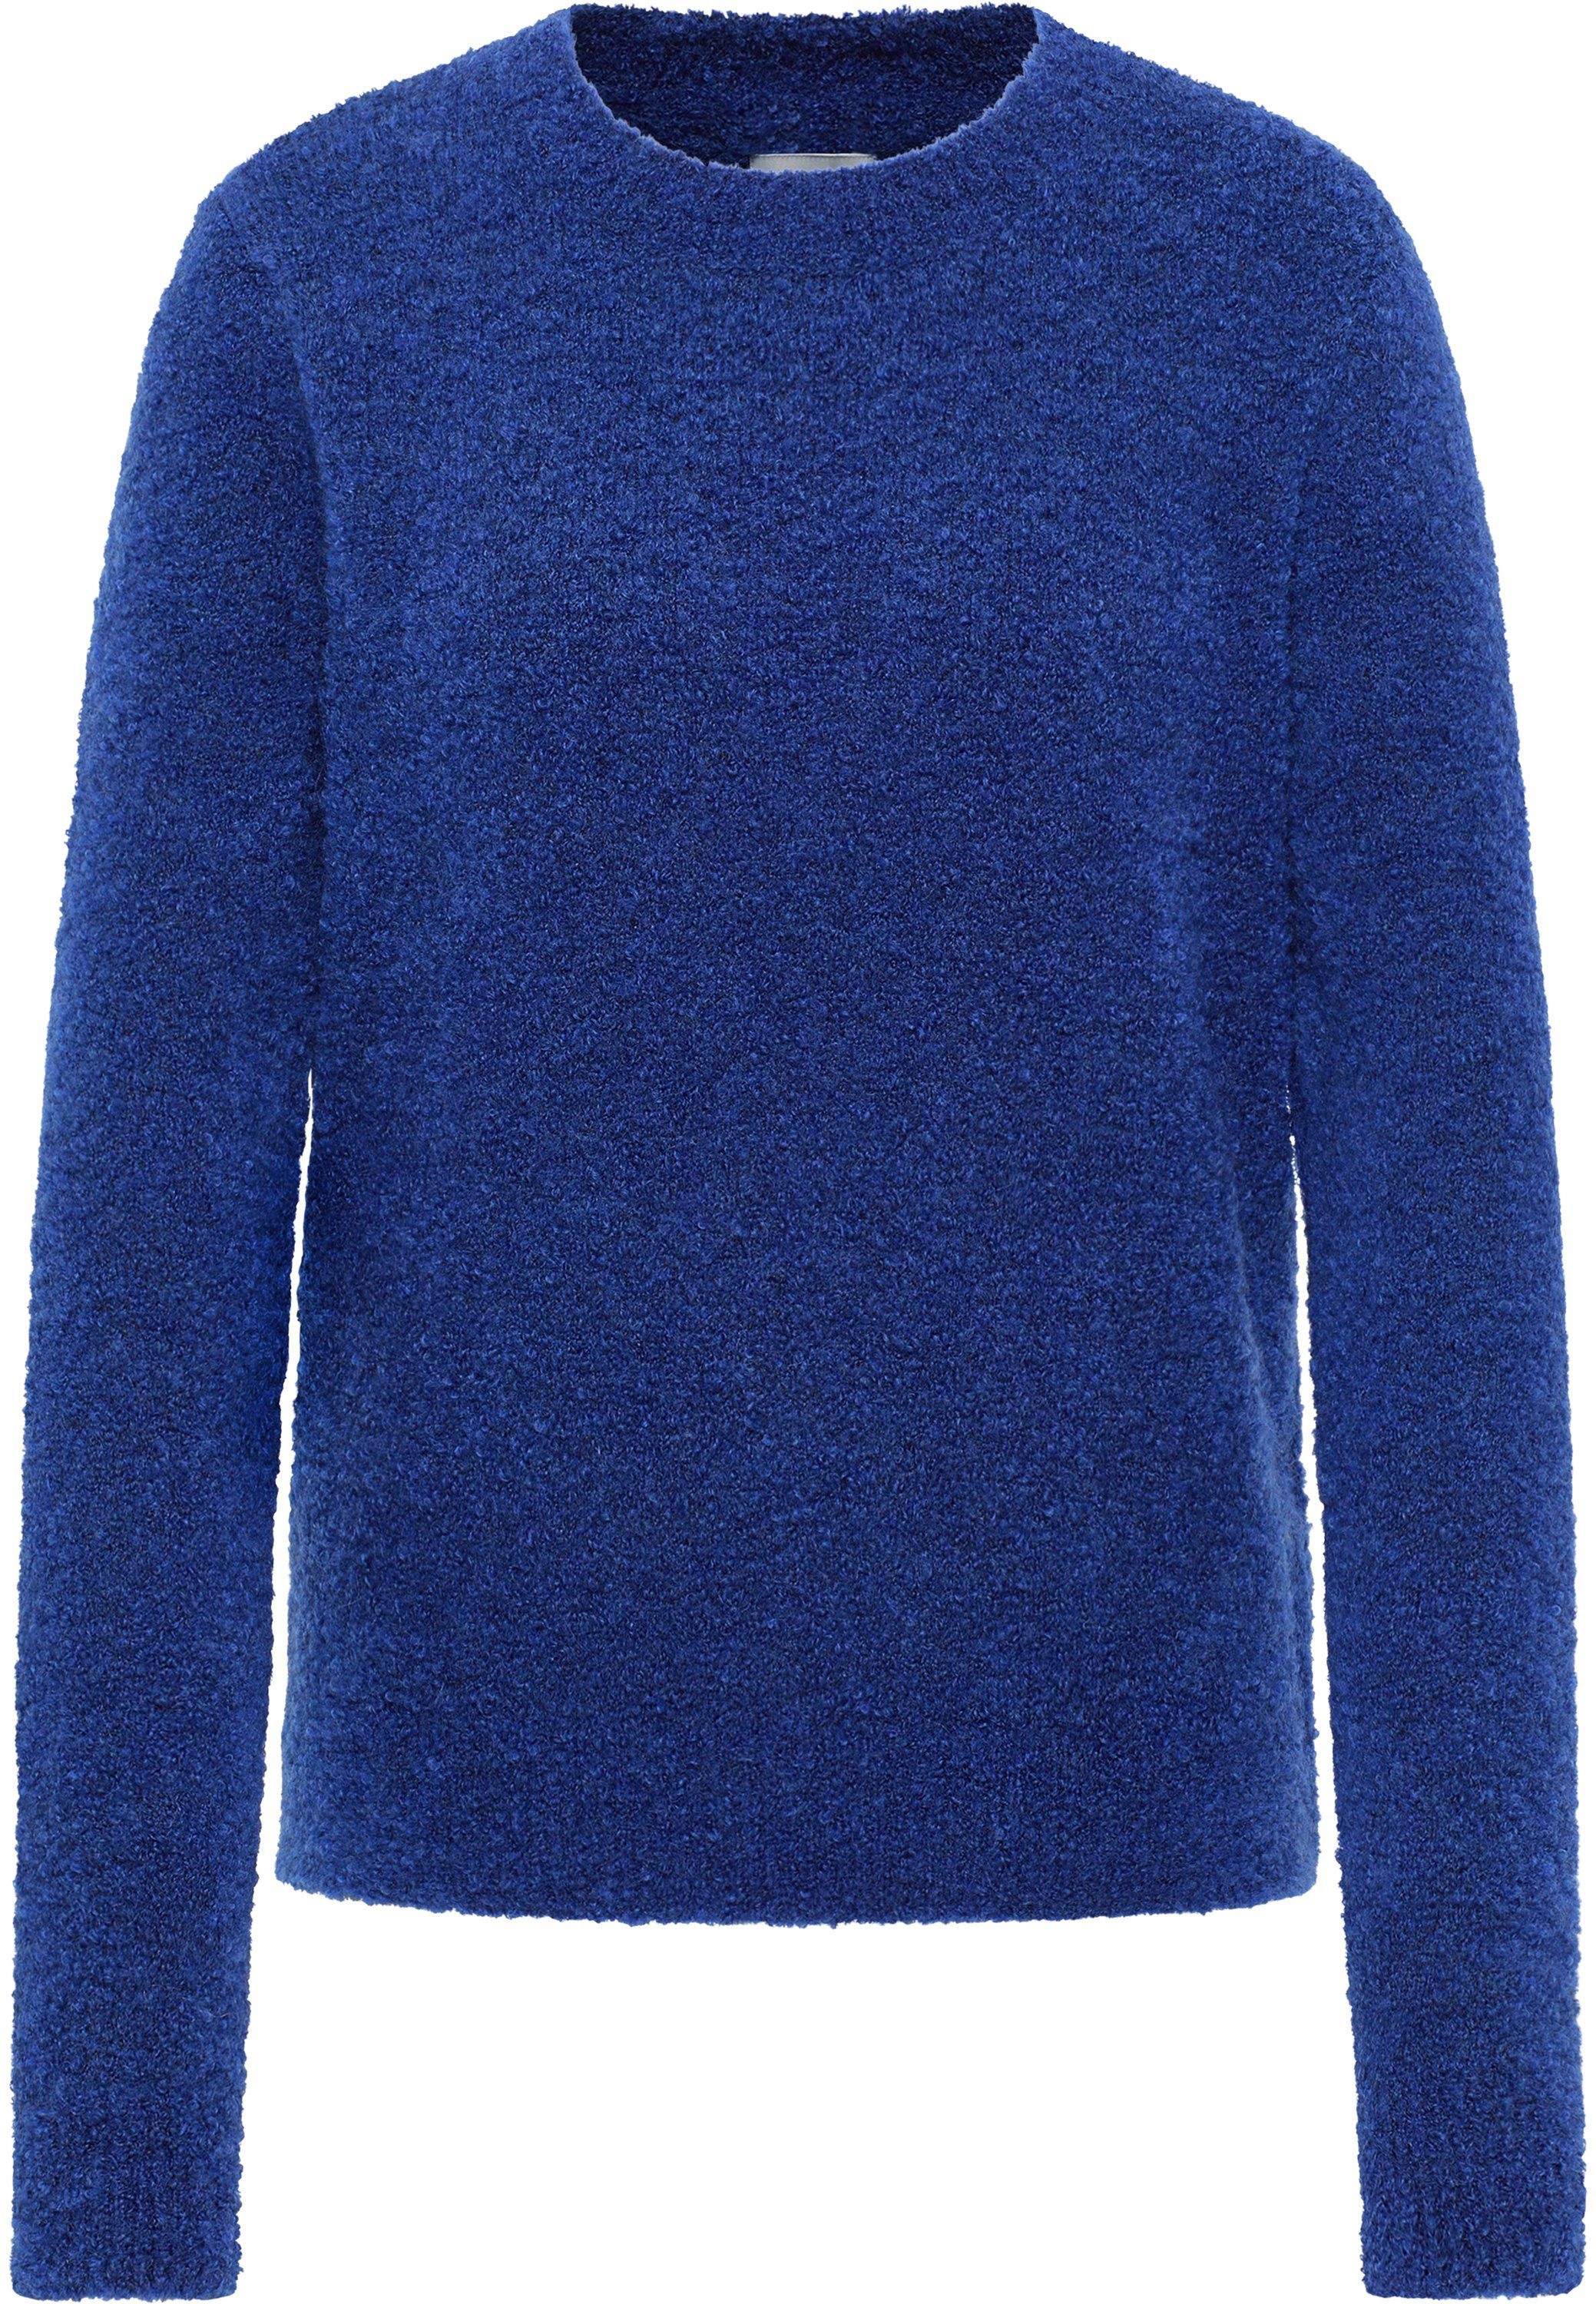 MUSTANG Sweater Mustang Strickpullover königsblau